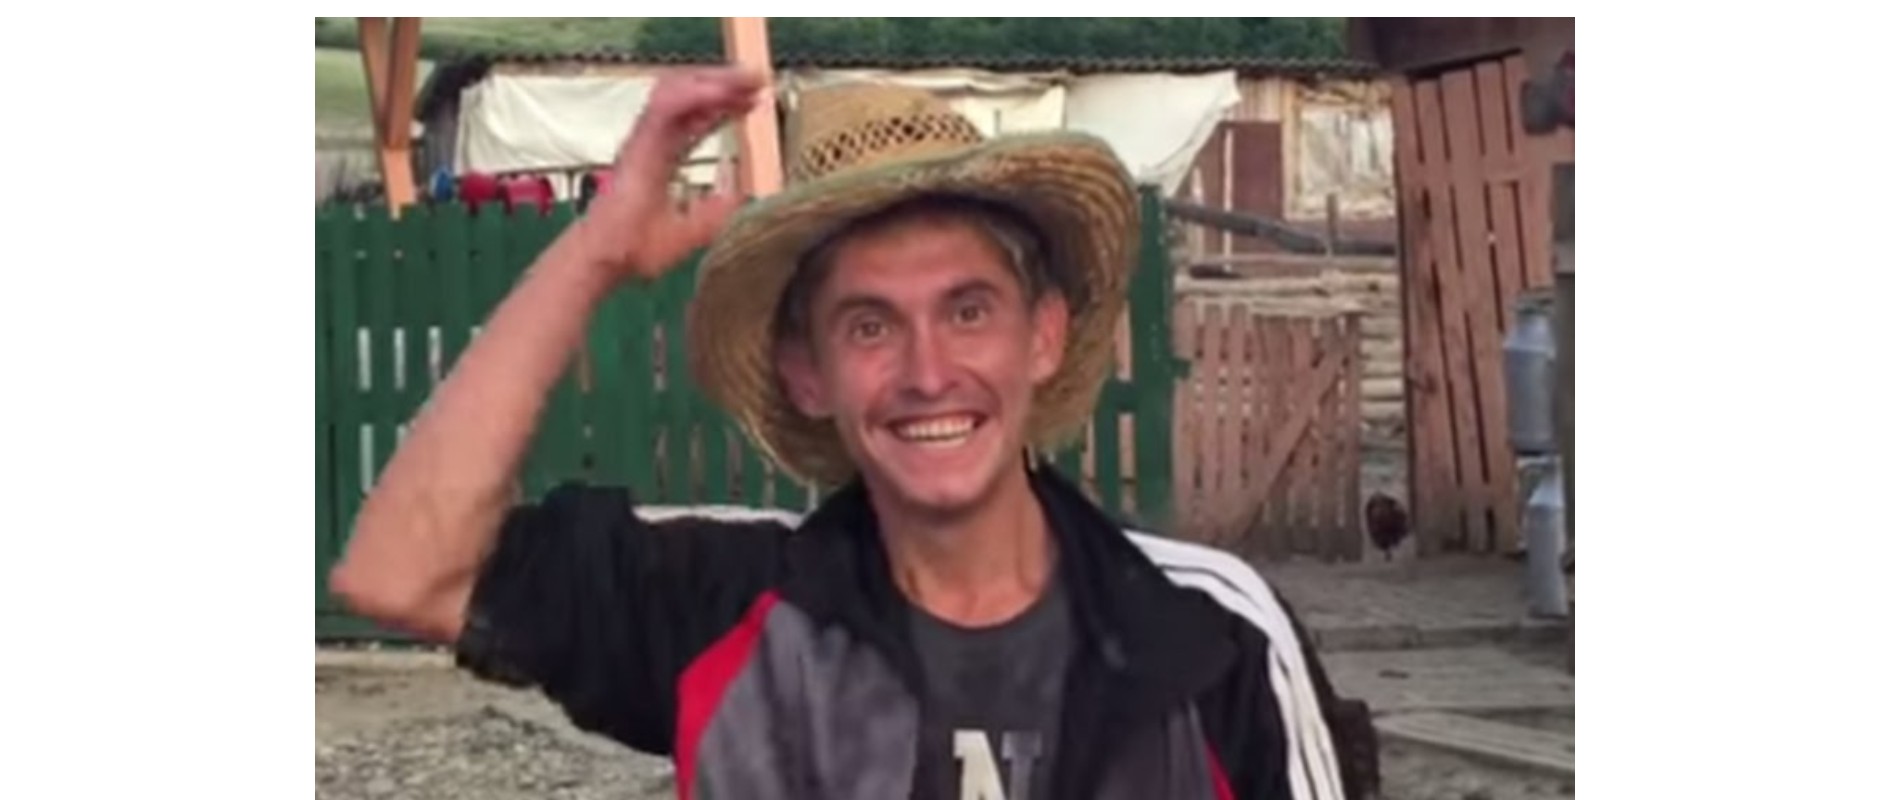 Cel mai celebru cioban român pe Youtube s-a stins din cauza băuturii